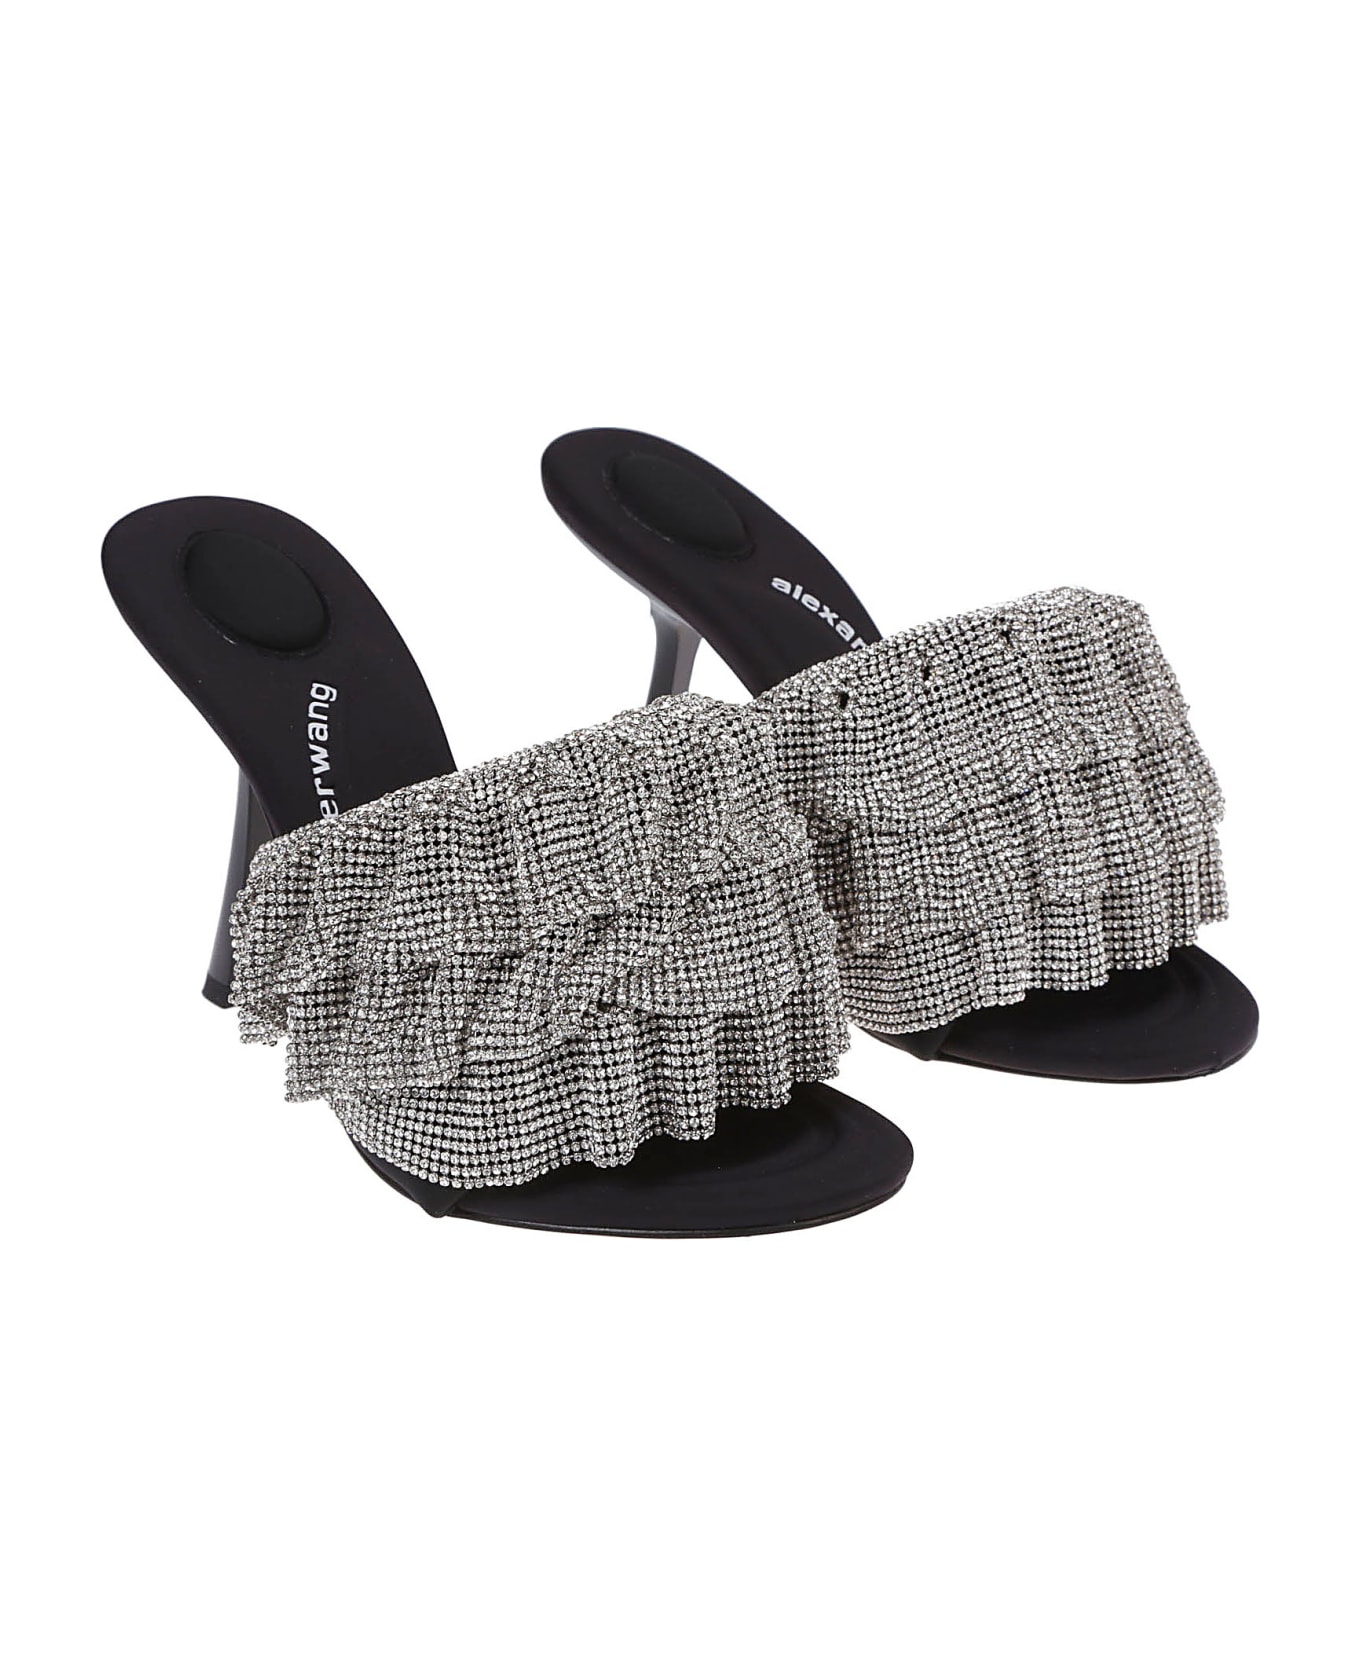 Alexander Wang Nala 105 Crystal Ruffle Sandals - Nero